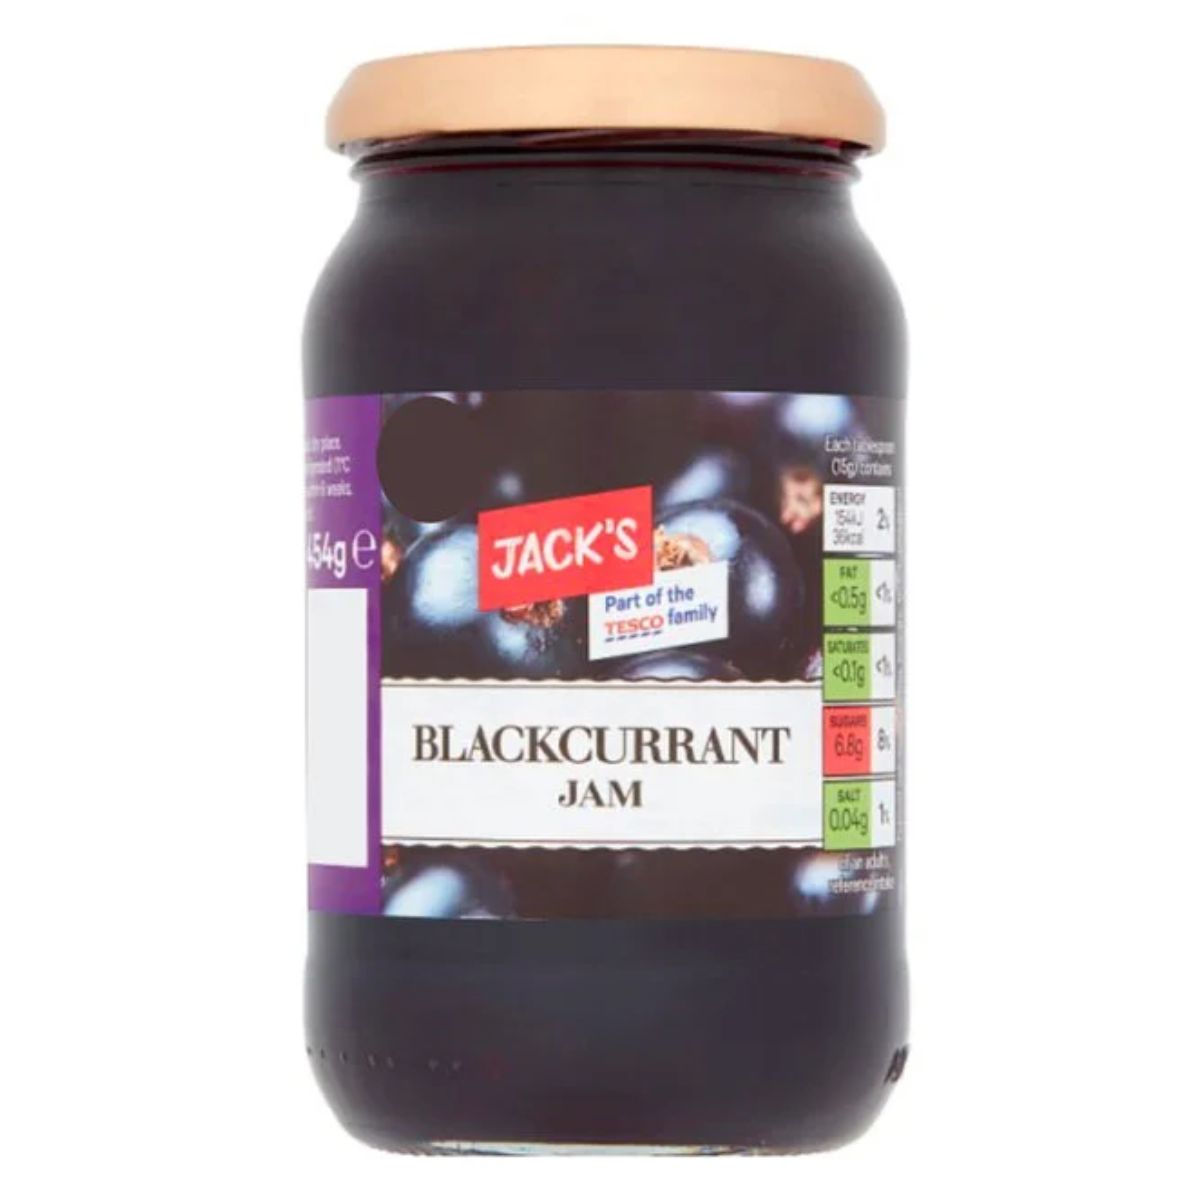 A jar of Jacks - Blackcurrant Jam - 454g on a white background.